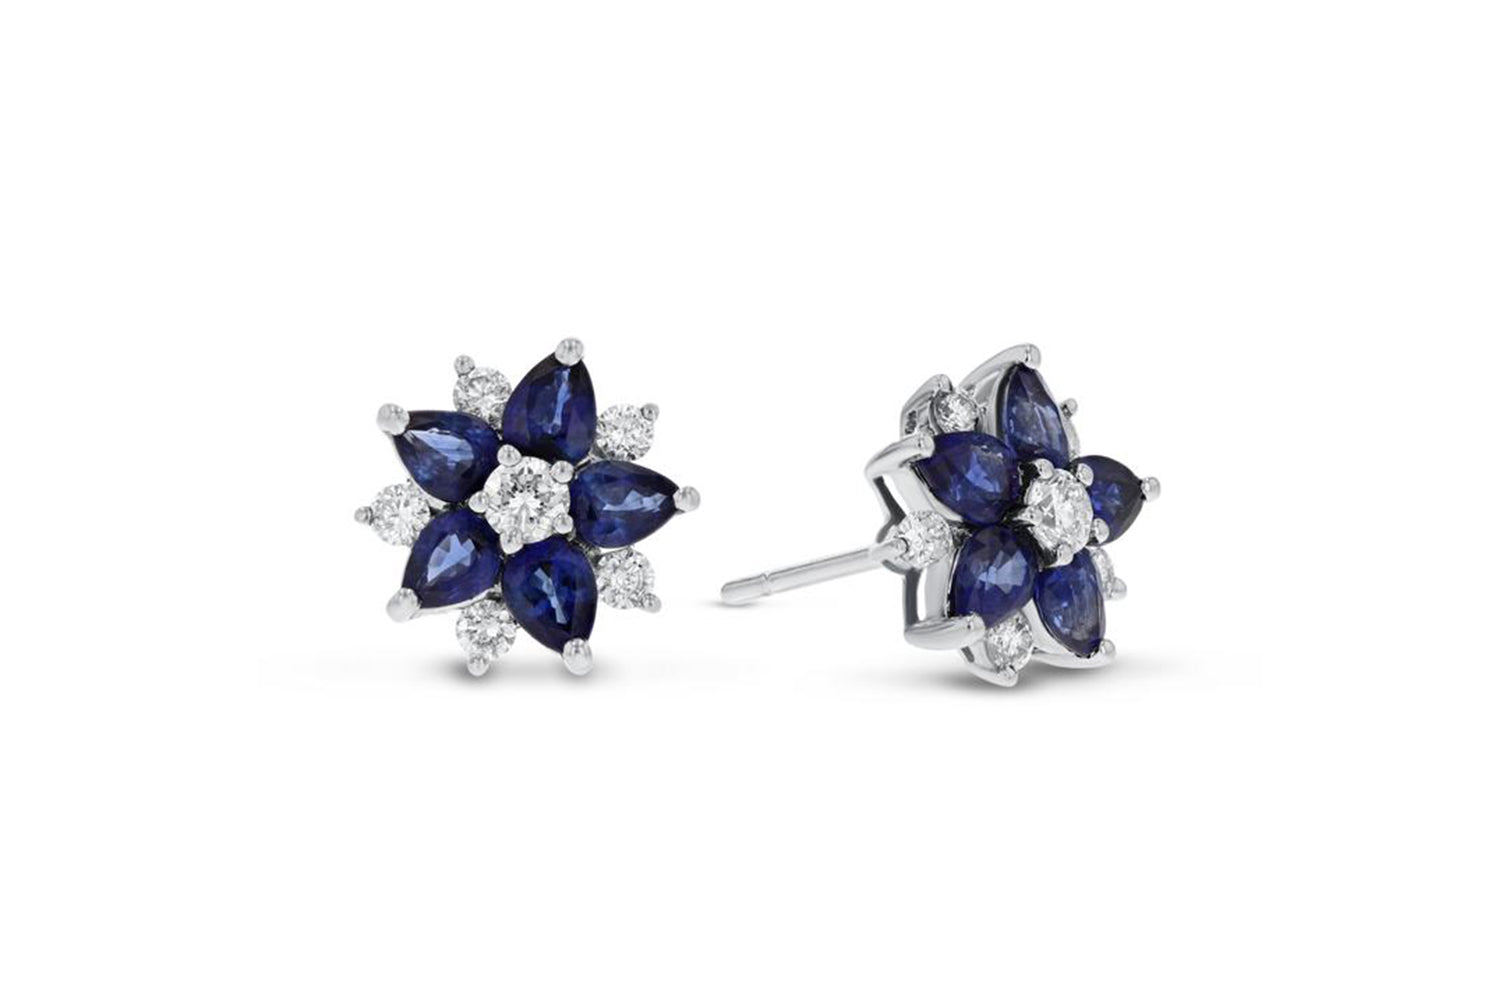 18K White Gold Sapphire & Diamond Flower Earrings, 2.26 Carats